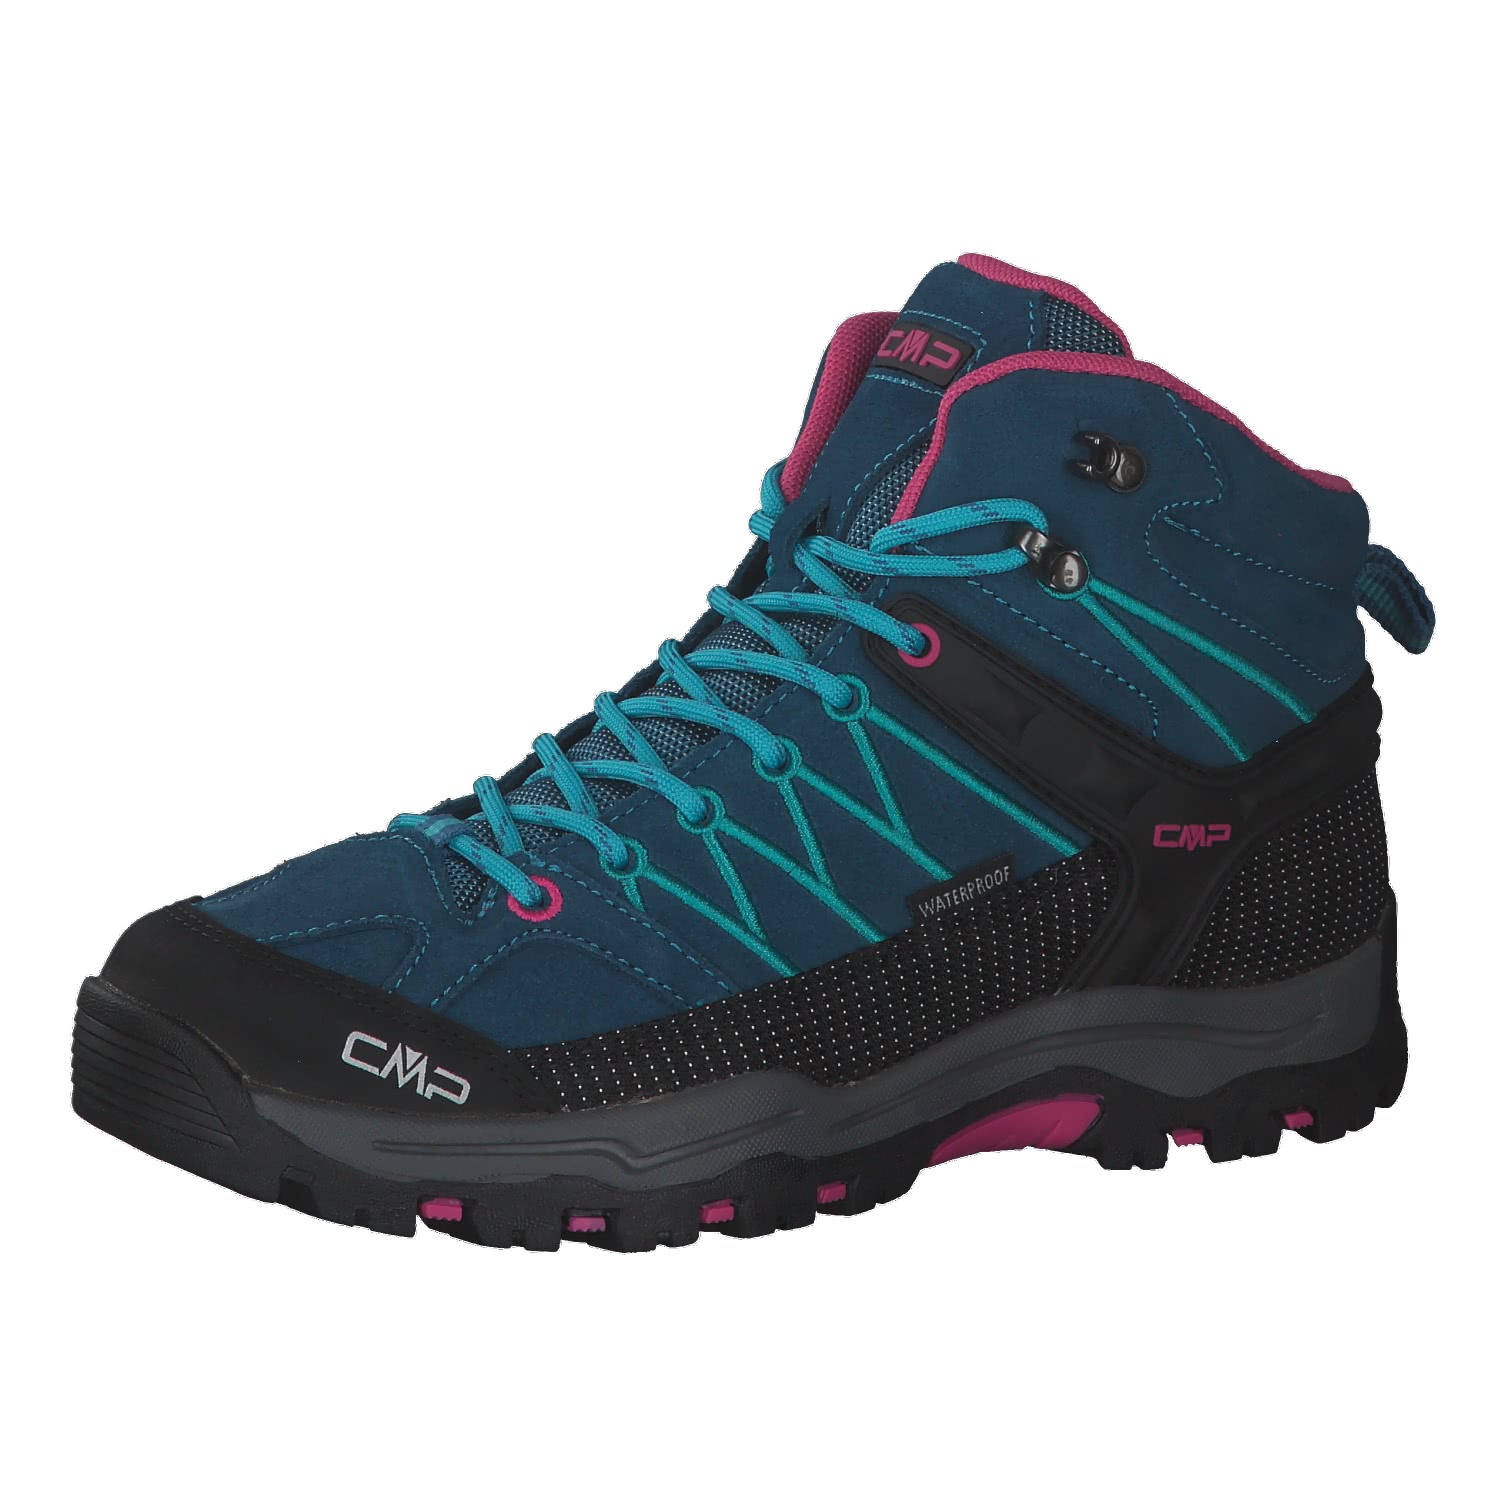 CMP Kinder Trekking Schuhe Rigel MID 3Q12944J | eBay